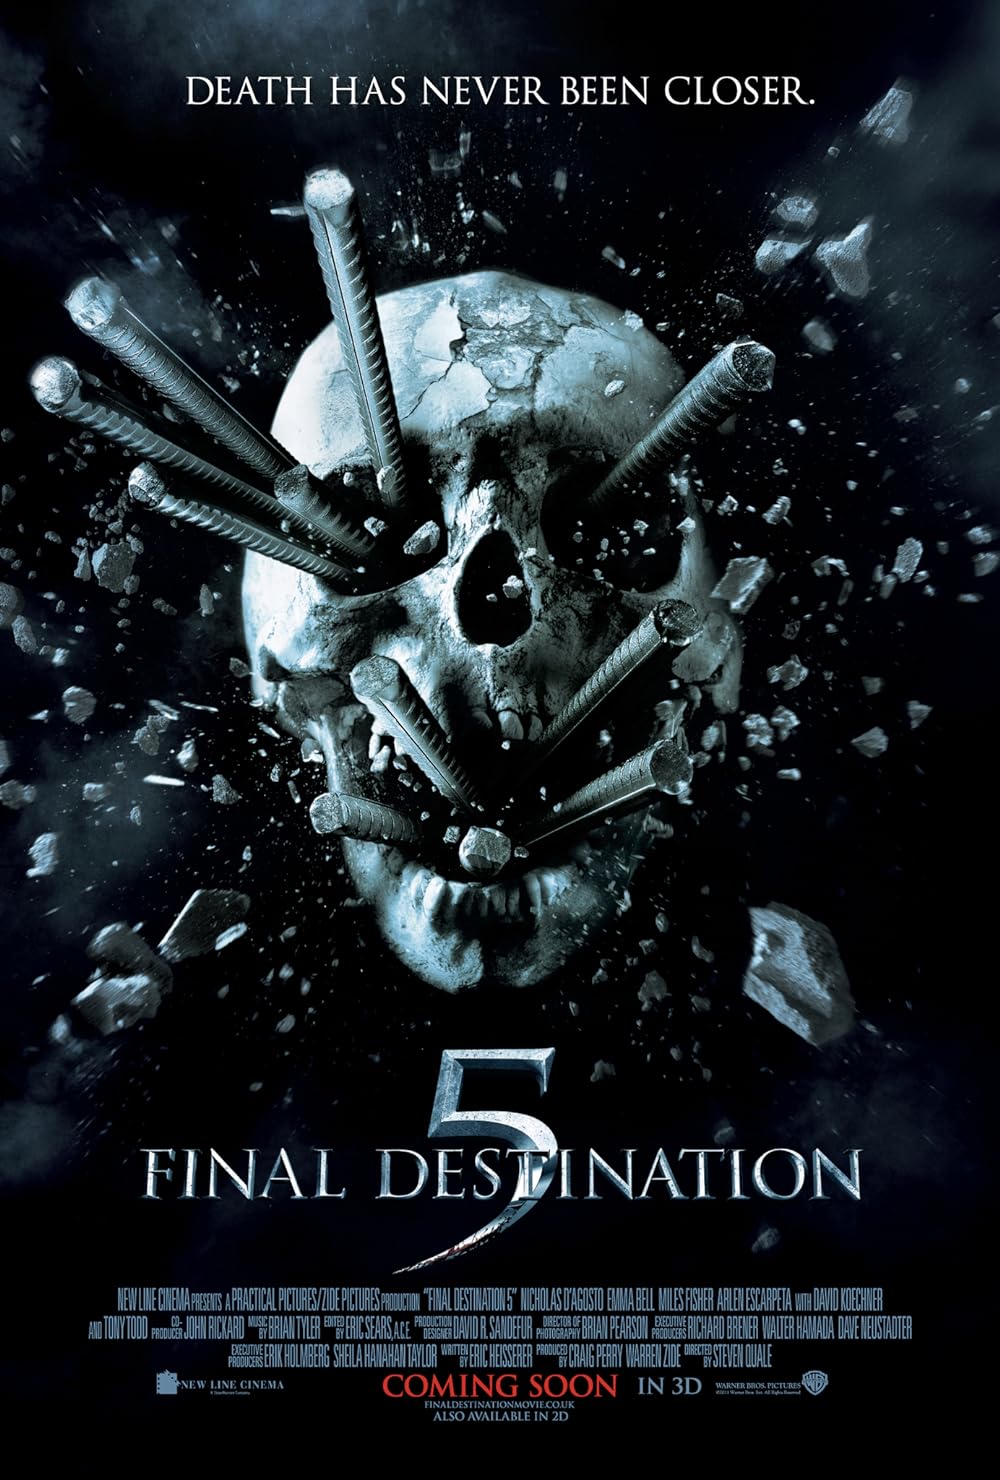 FULL MOVIE: Final Destination 5 (2011)